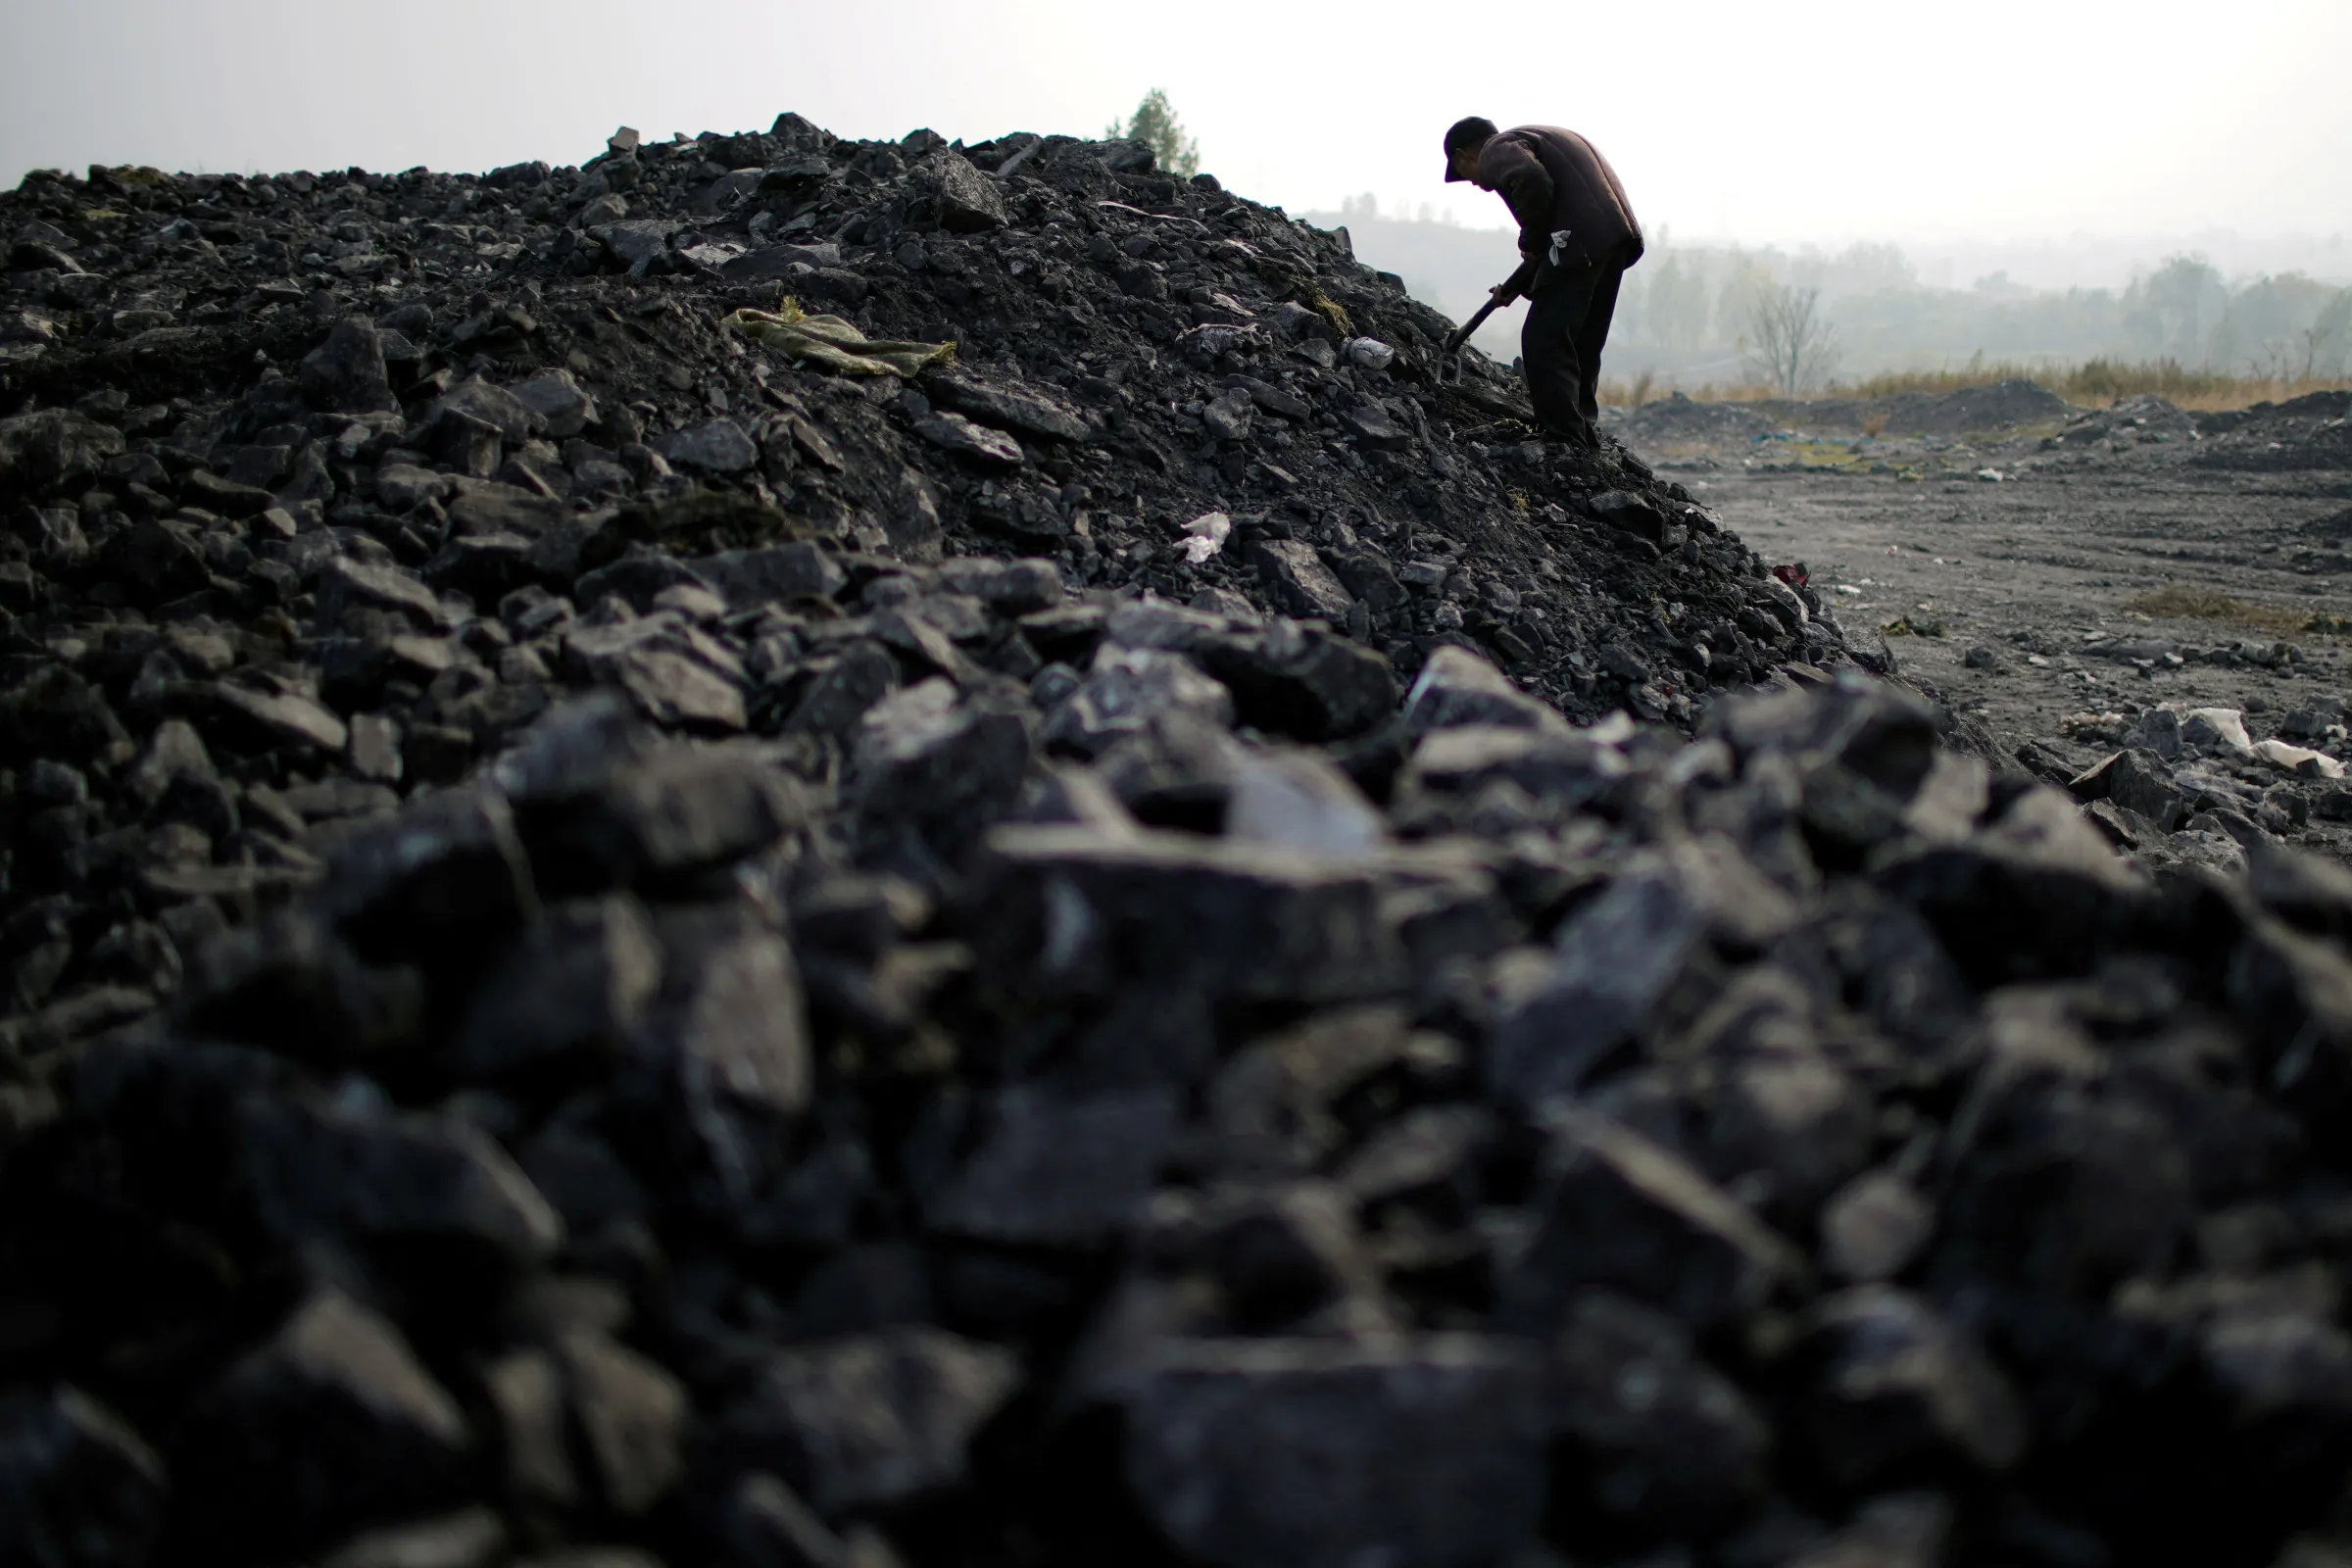 Zhang Tieliang 76, sifts through dunes of low-grade coal near a coal mine in Ruzhou, Henan province, China November 4, 2021. REUTERS/Aly Song